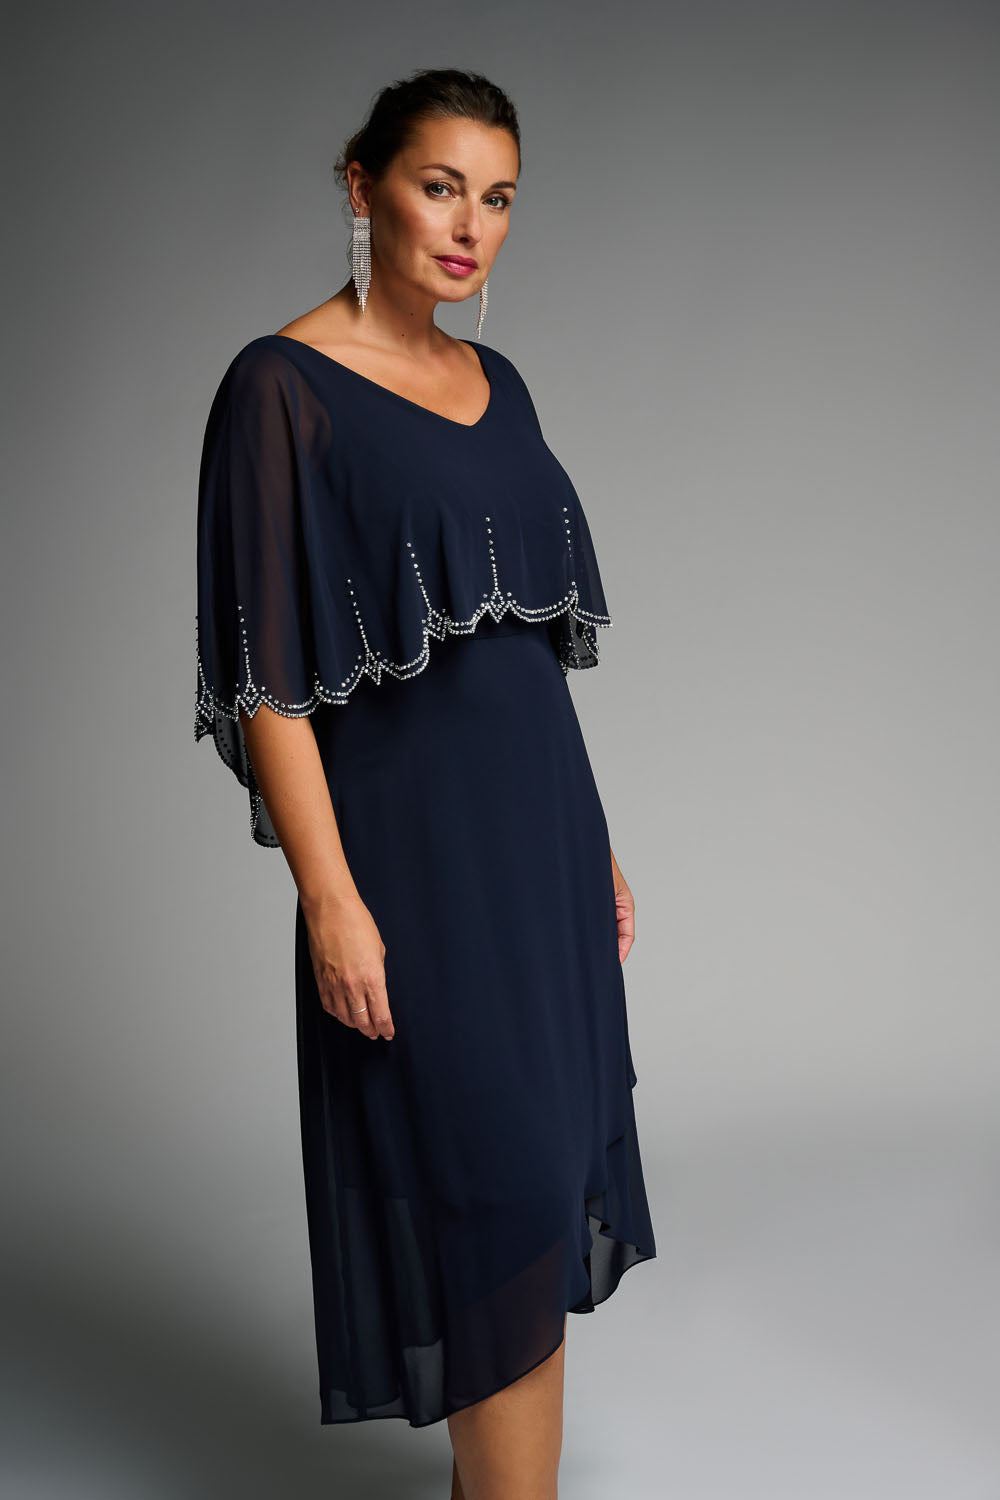 Joseph Ribkoff Midnight Blue Chiffon Overlay Dress Style 223730